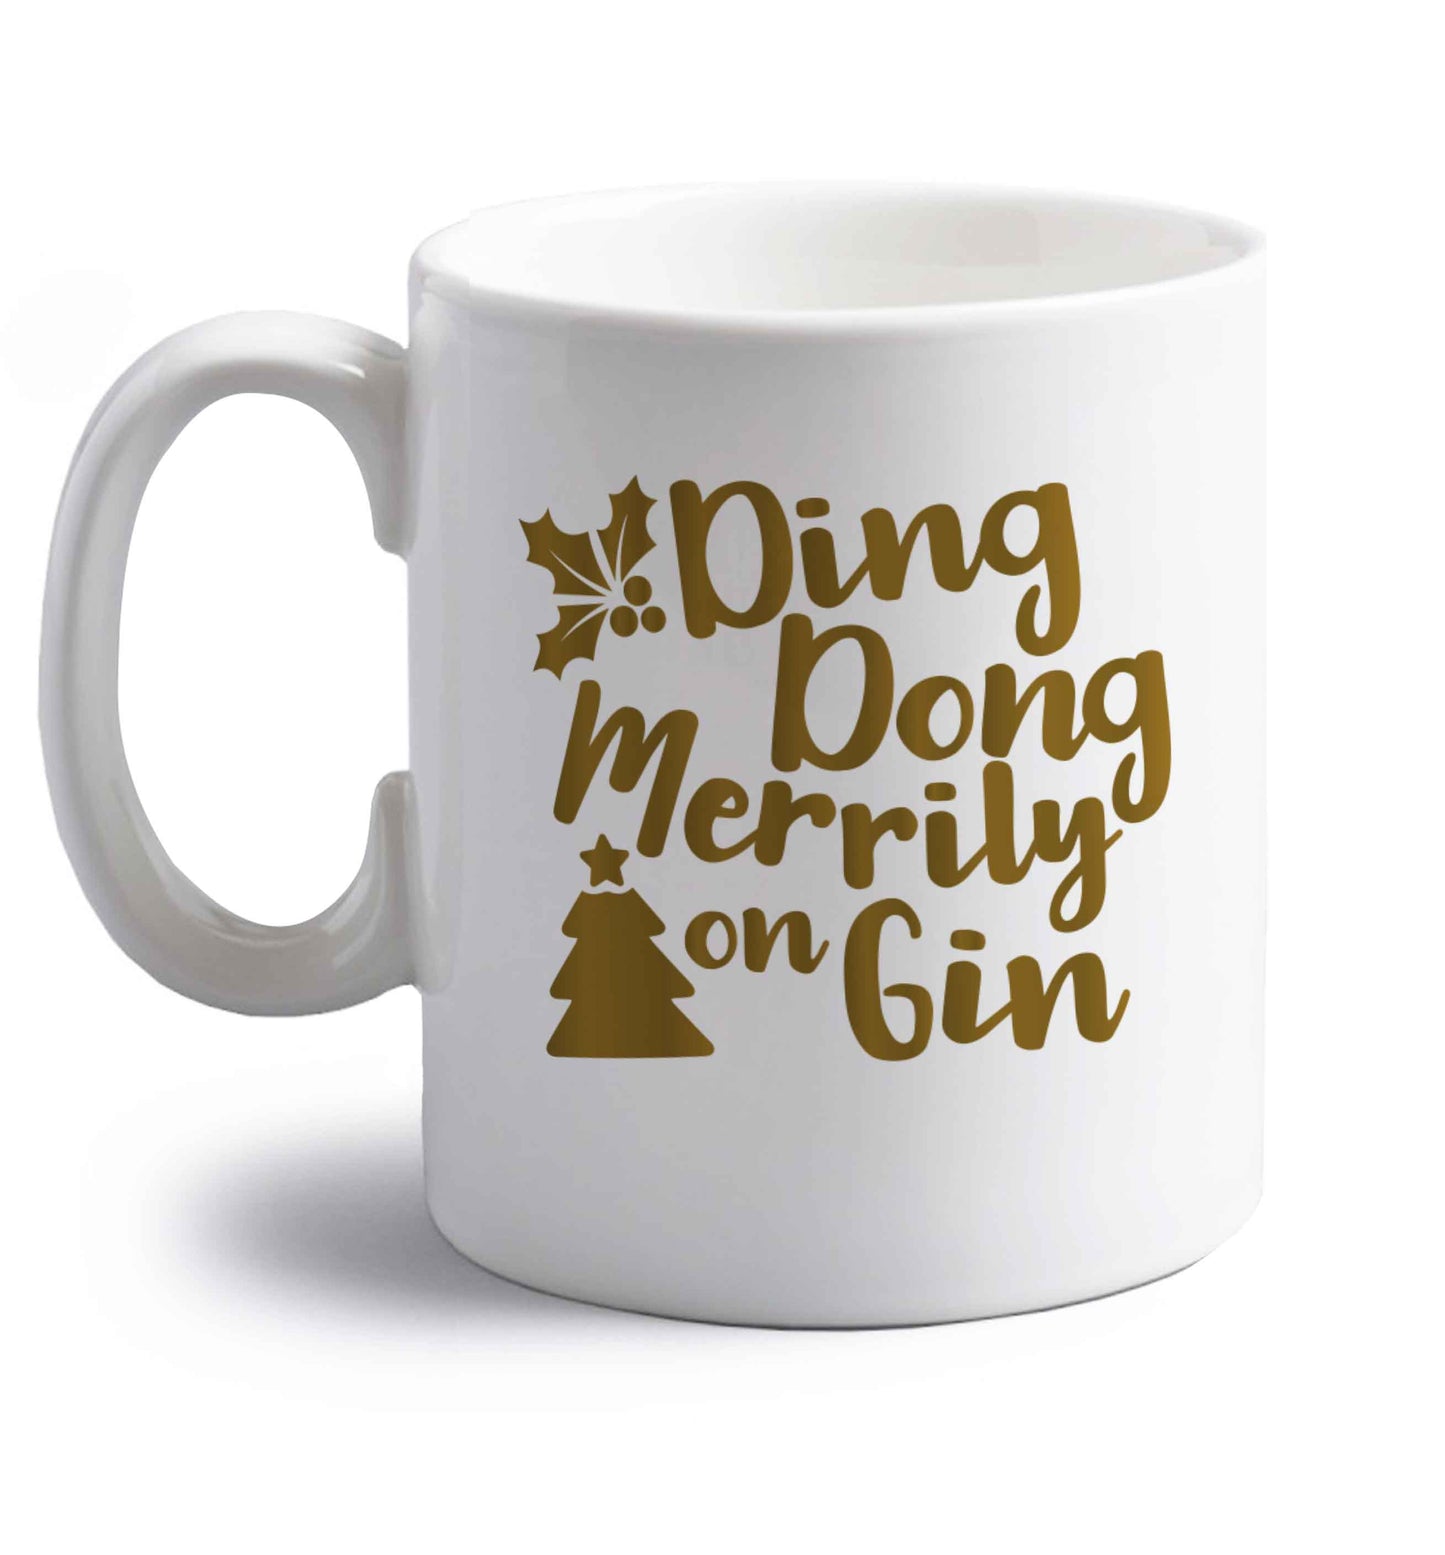 Ding dong merrily on gin right handed white ceramic mug 